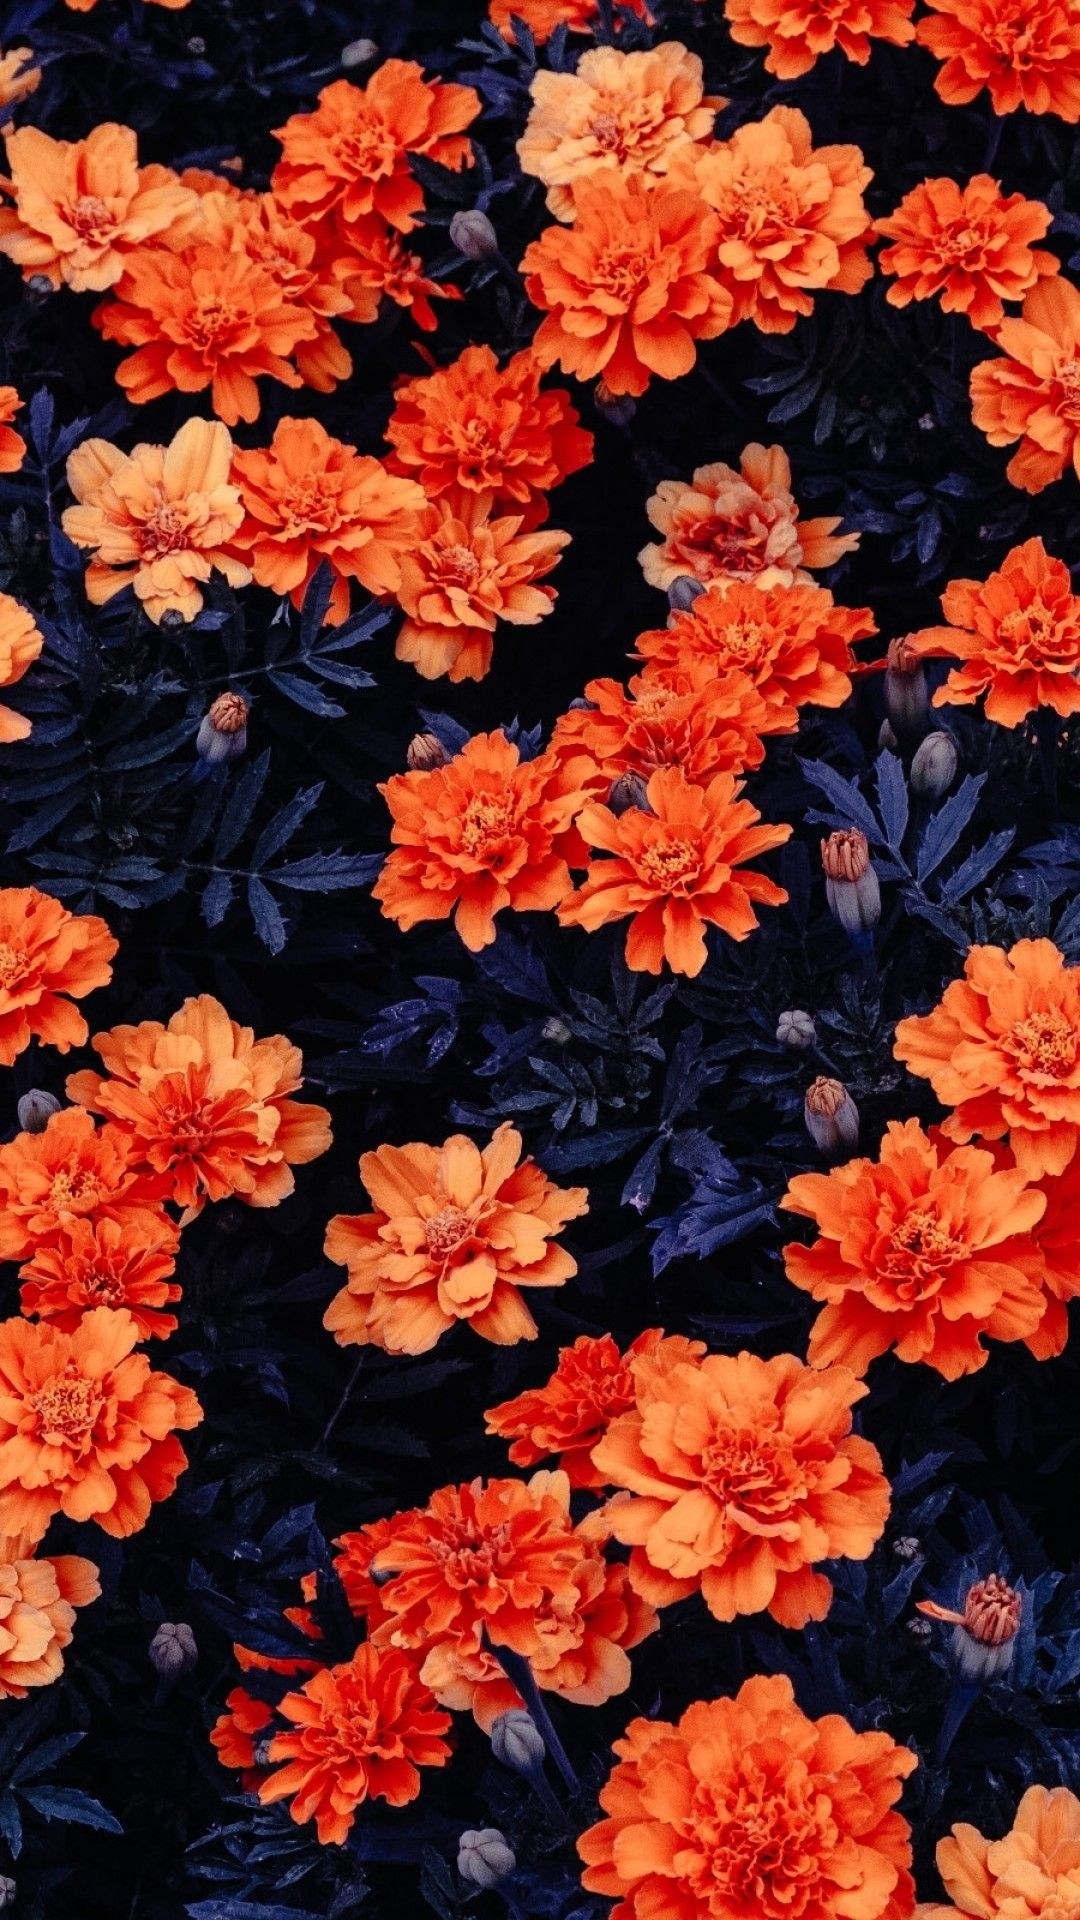 1080x1920 Orange Flowers | Flower iphone wallpaper, Free flower wallpaper, Orange wallpaper